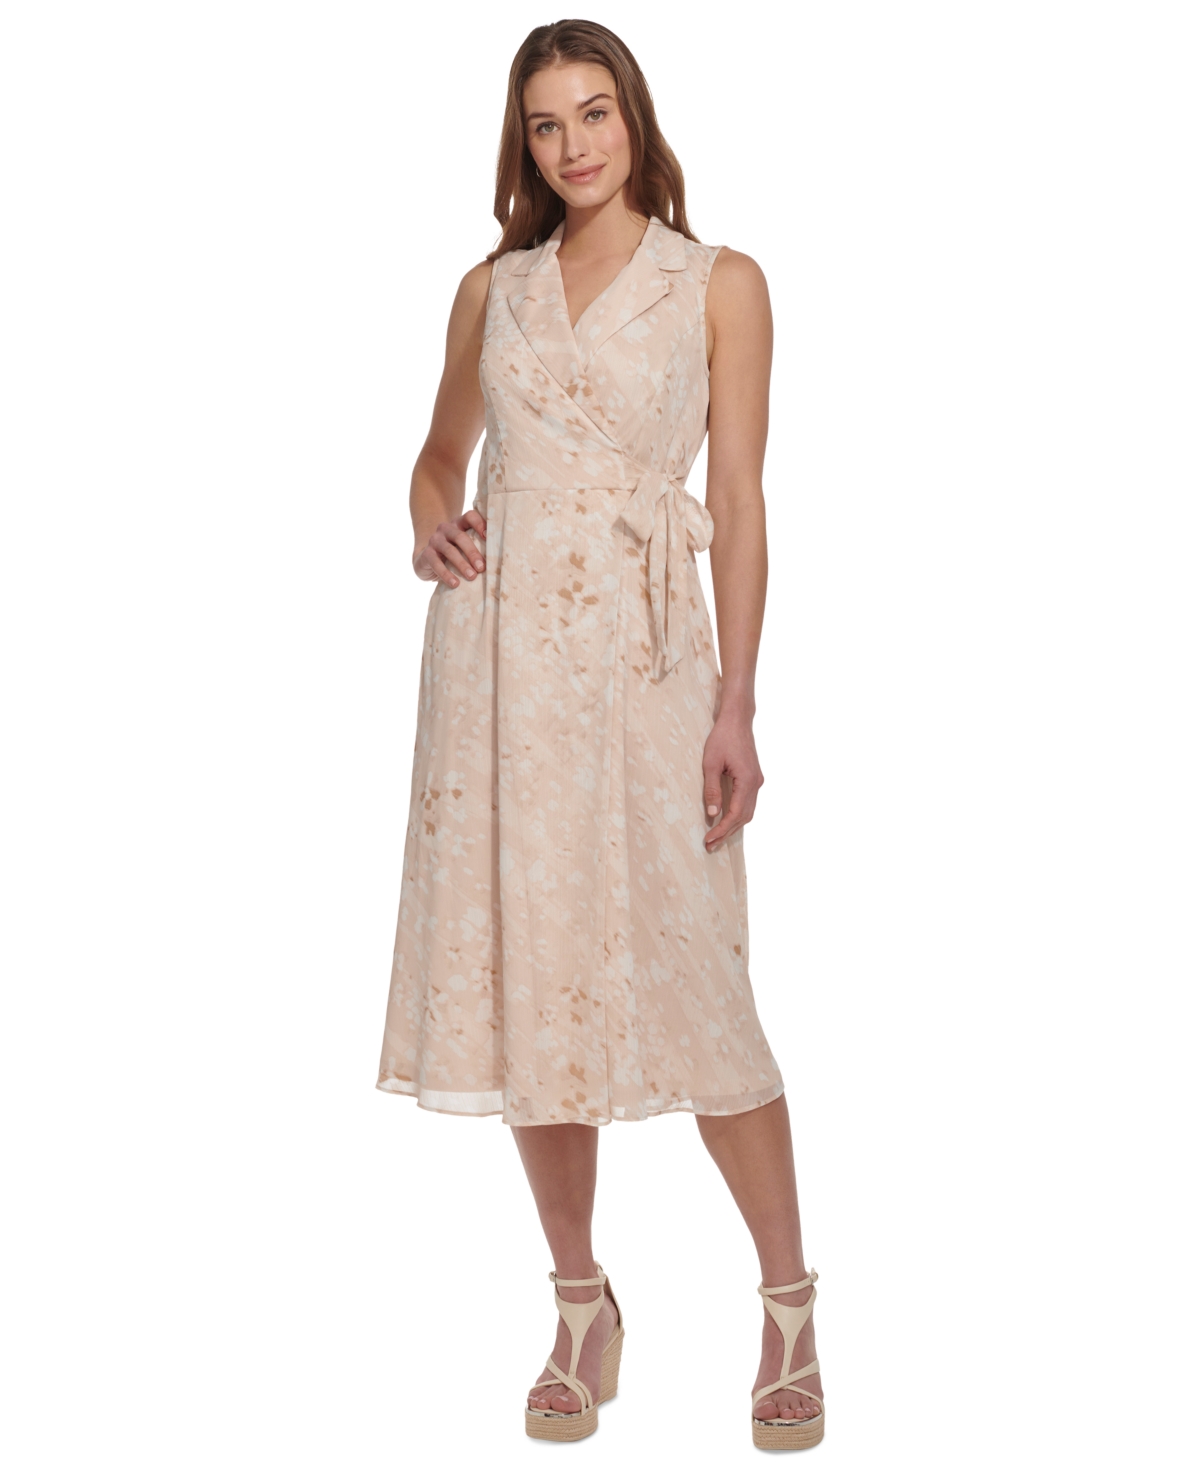 Women's Printed Chiffon Side-Tie Midi Dress - Beige Multi